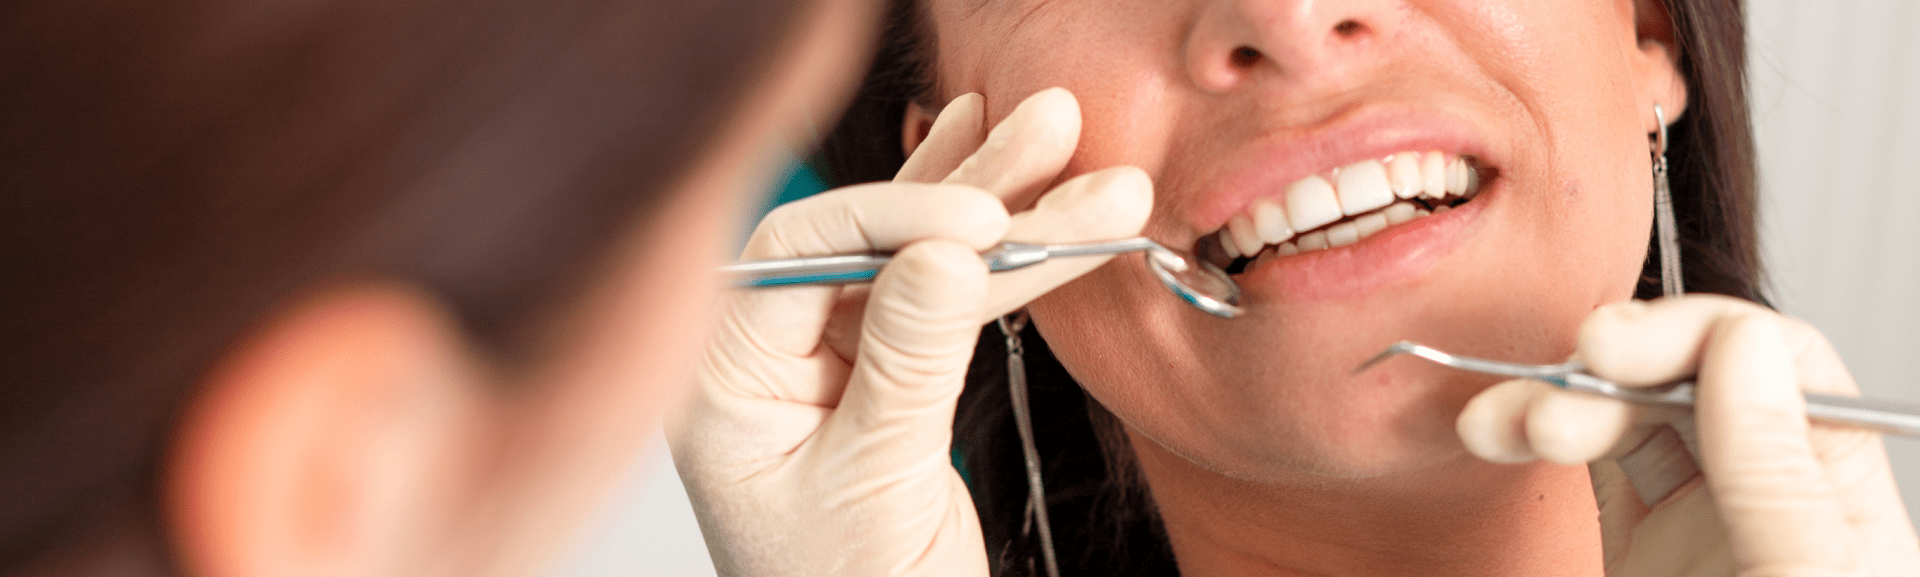 cosmetic periodontal procedures service banner-min